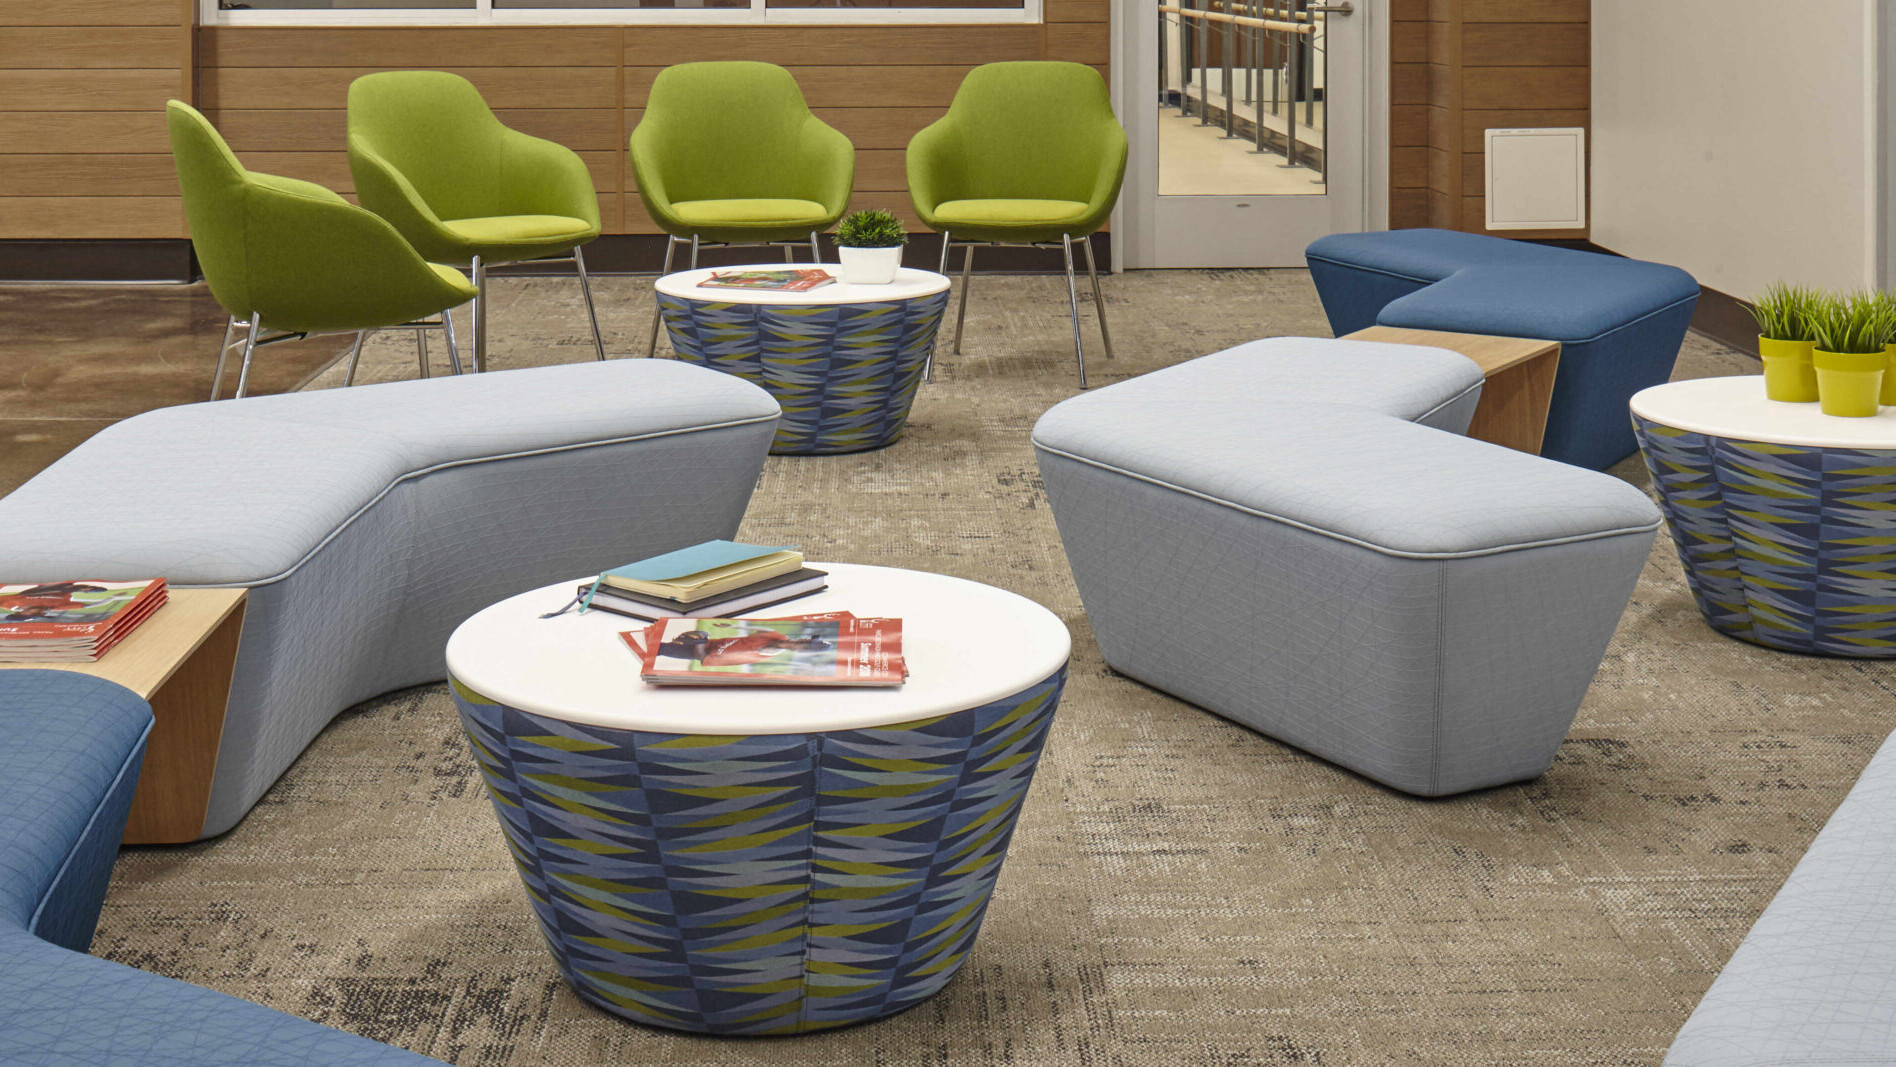 Office Furniture Denver: Recreation Center Design